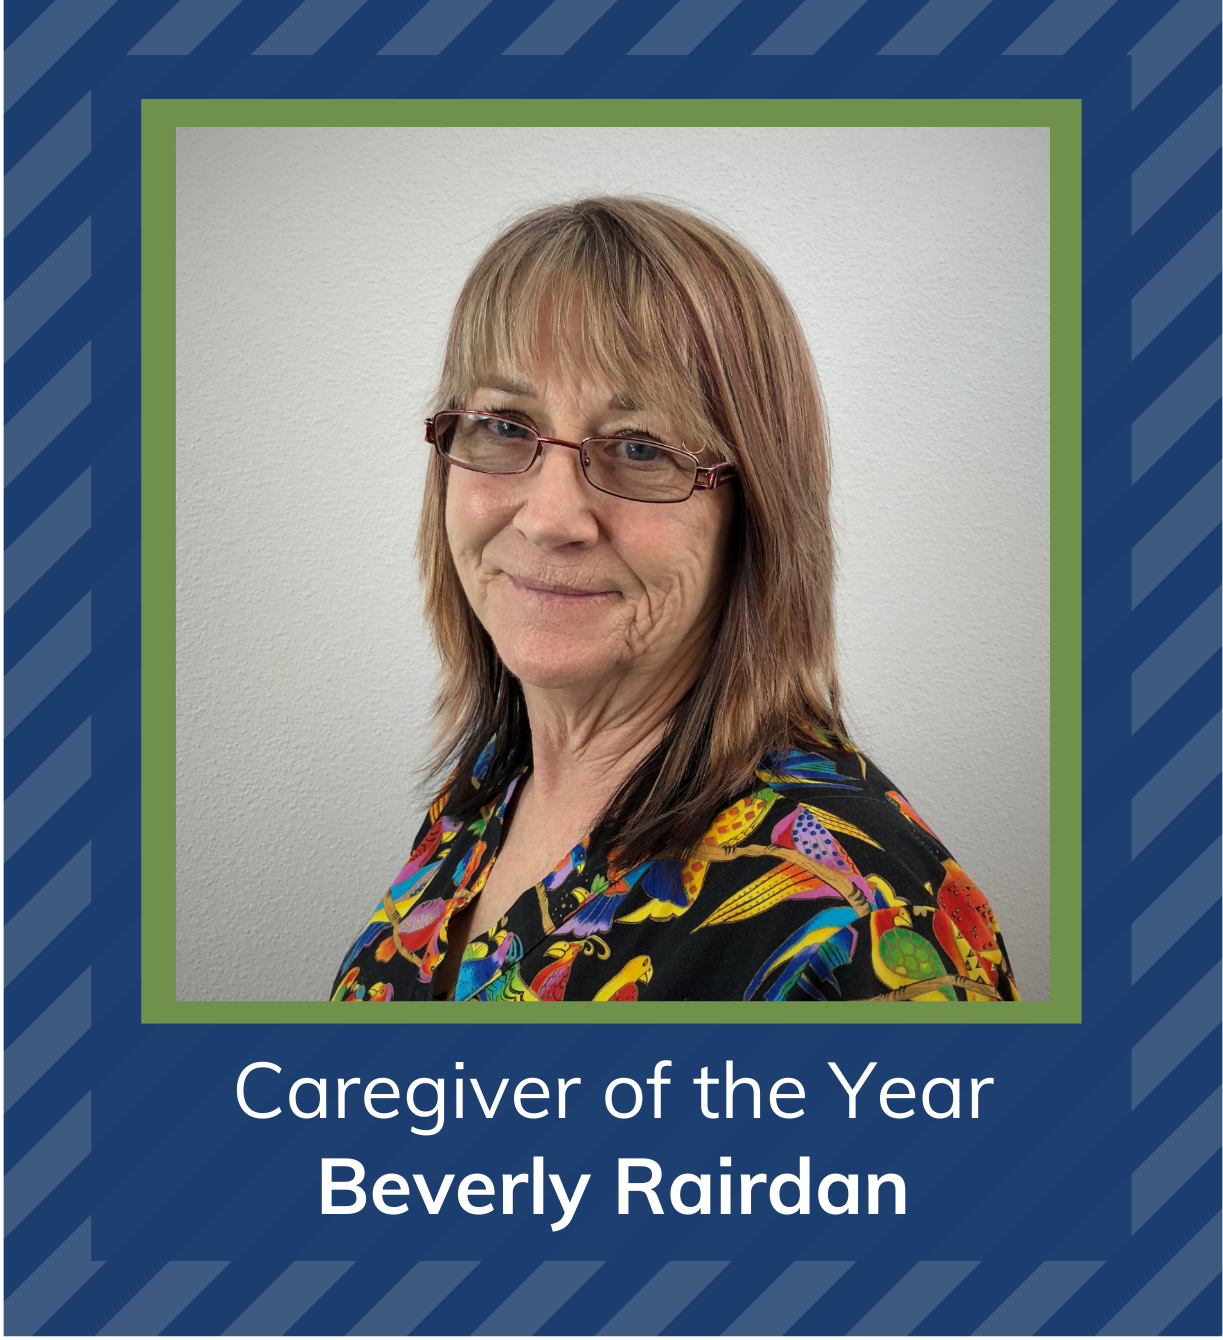 Beverly Rairdan Caregiver of the Year 2020